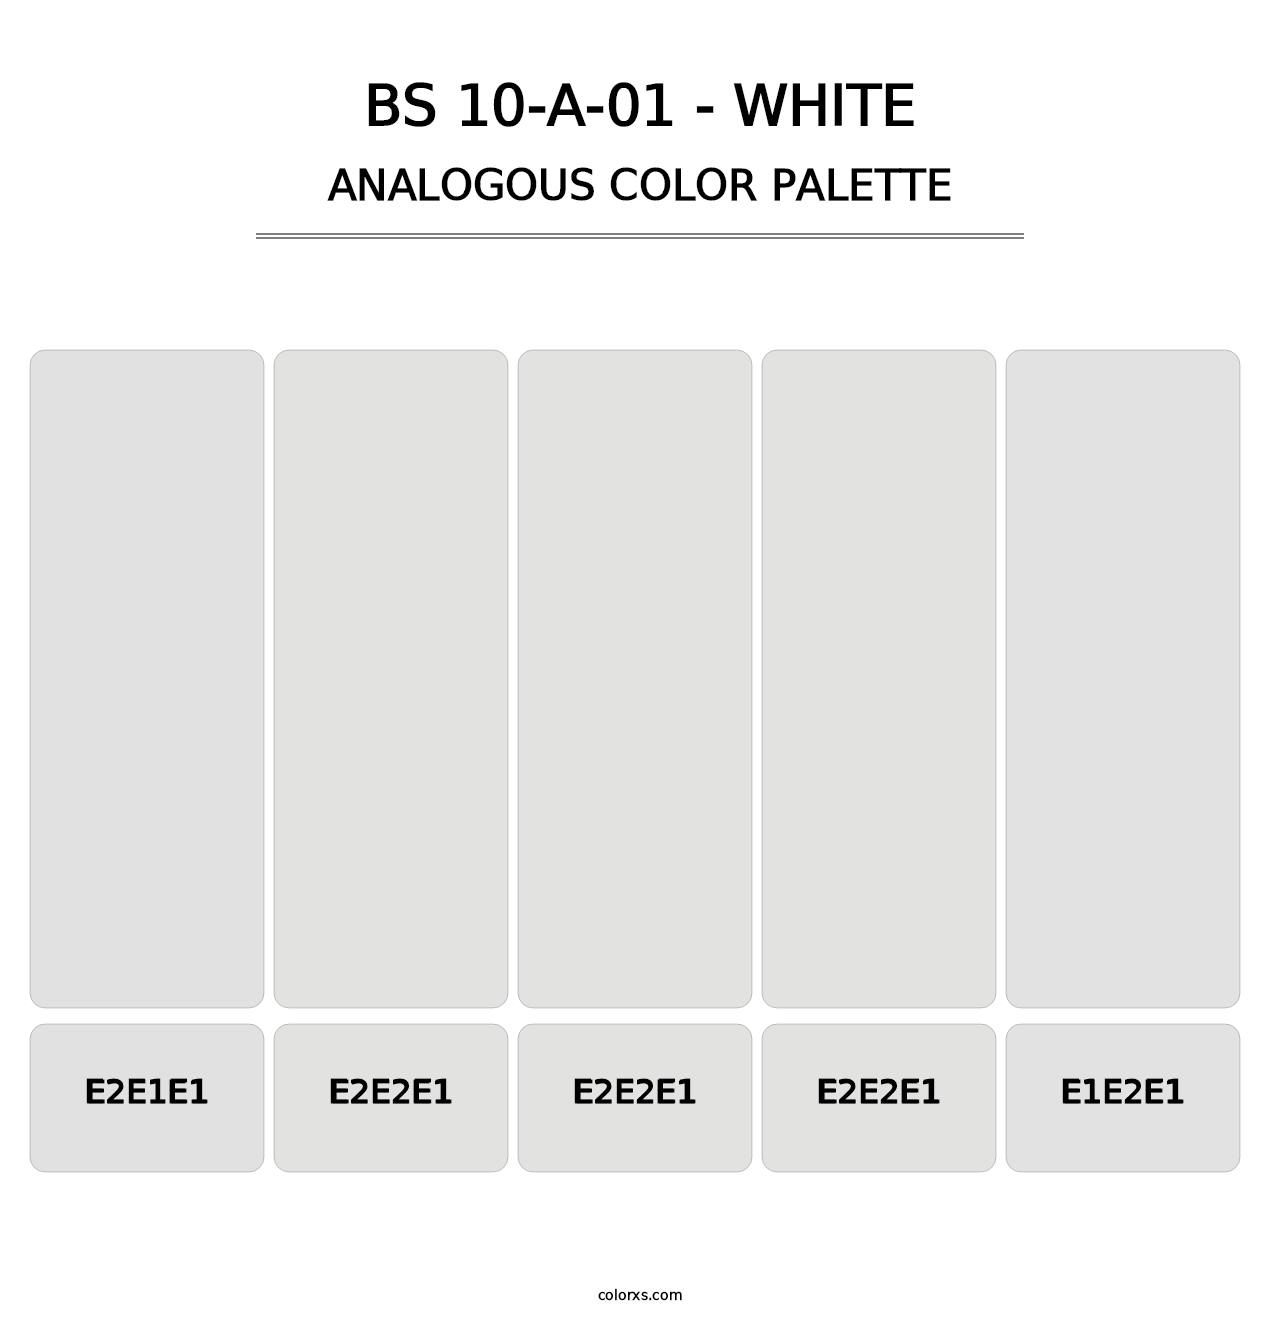 BS 10-A-01 - White - Analogous Color Palette